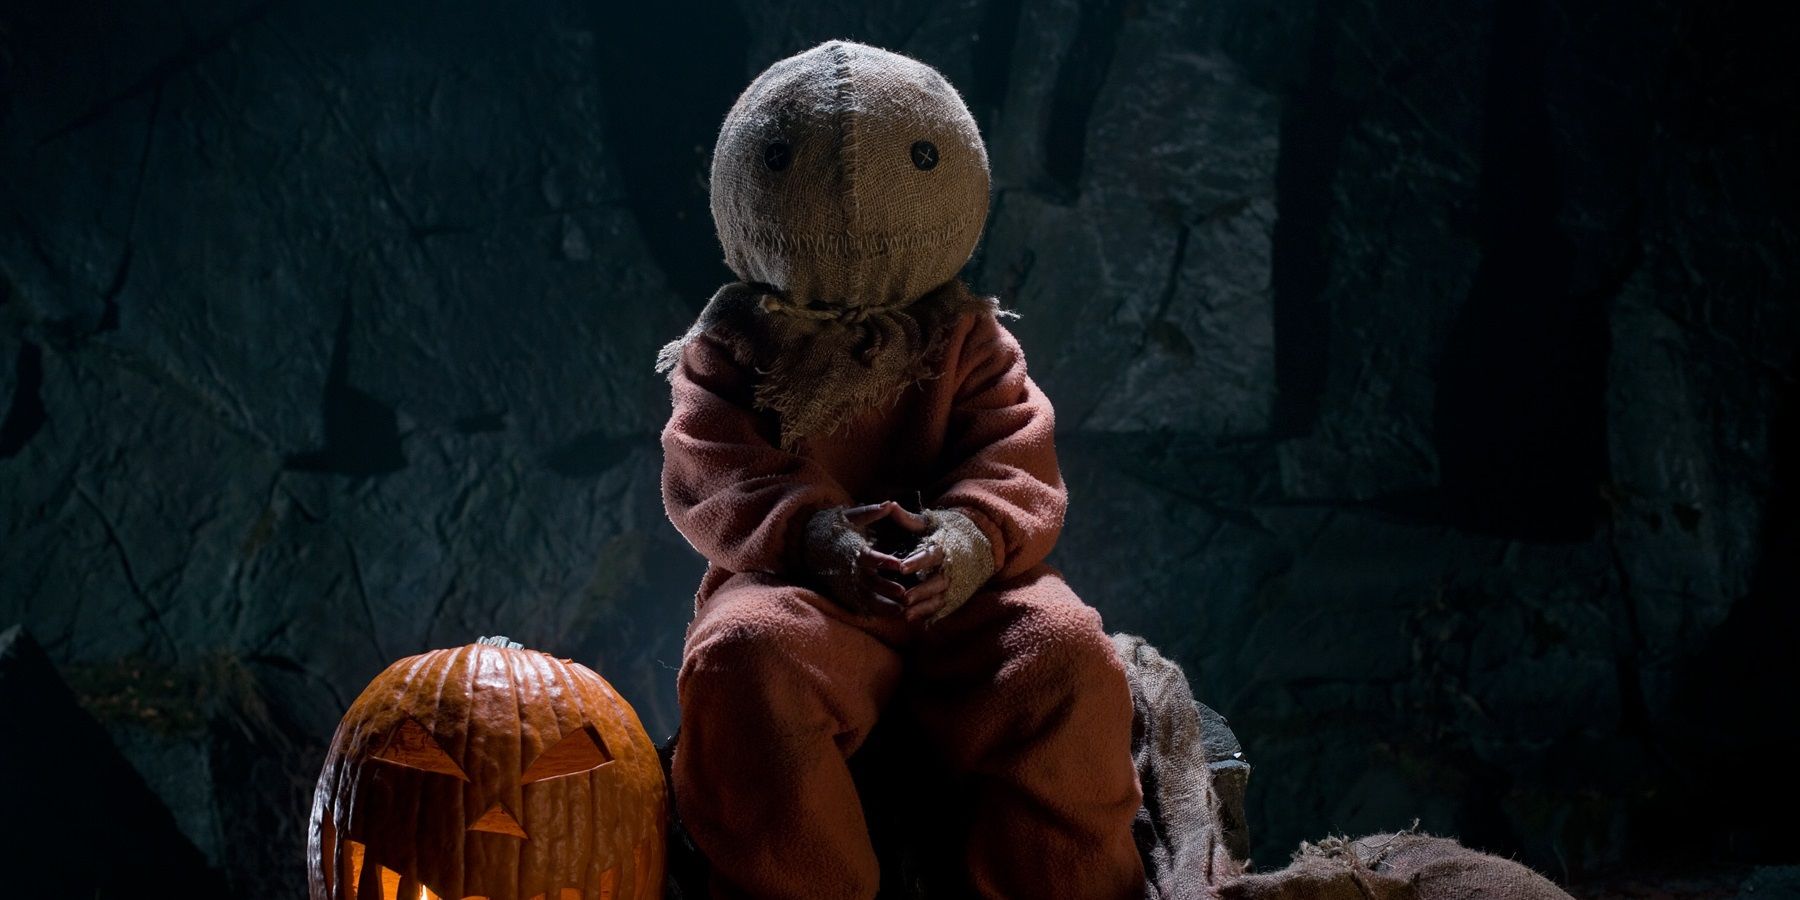 Sam sitting near a pumpkin in Trick 'r Treat